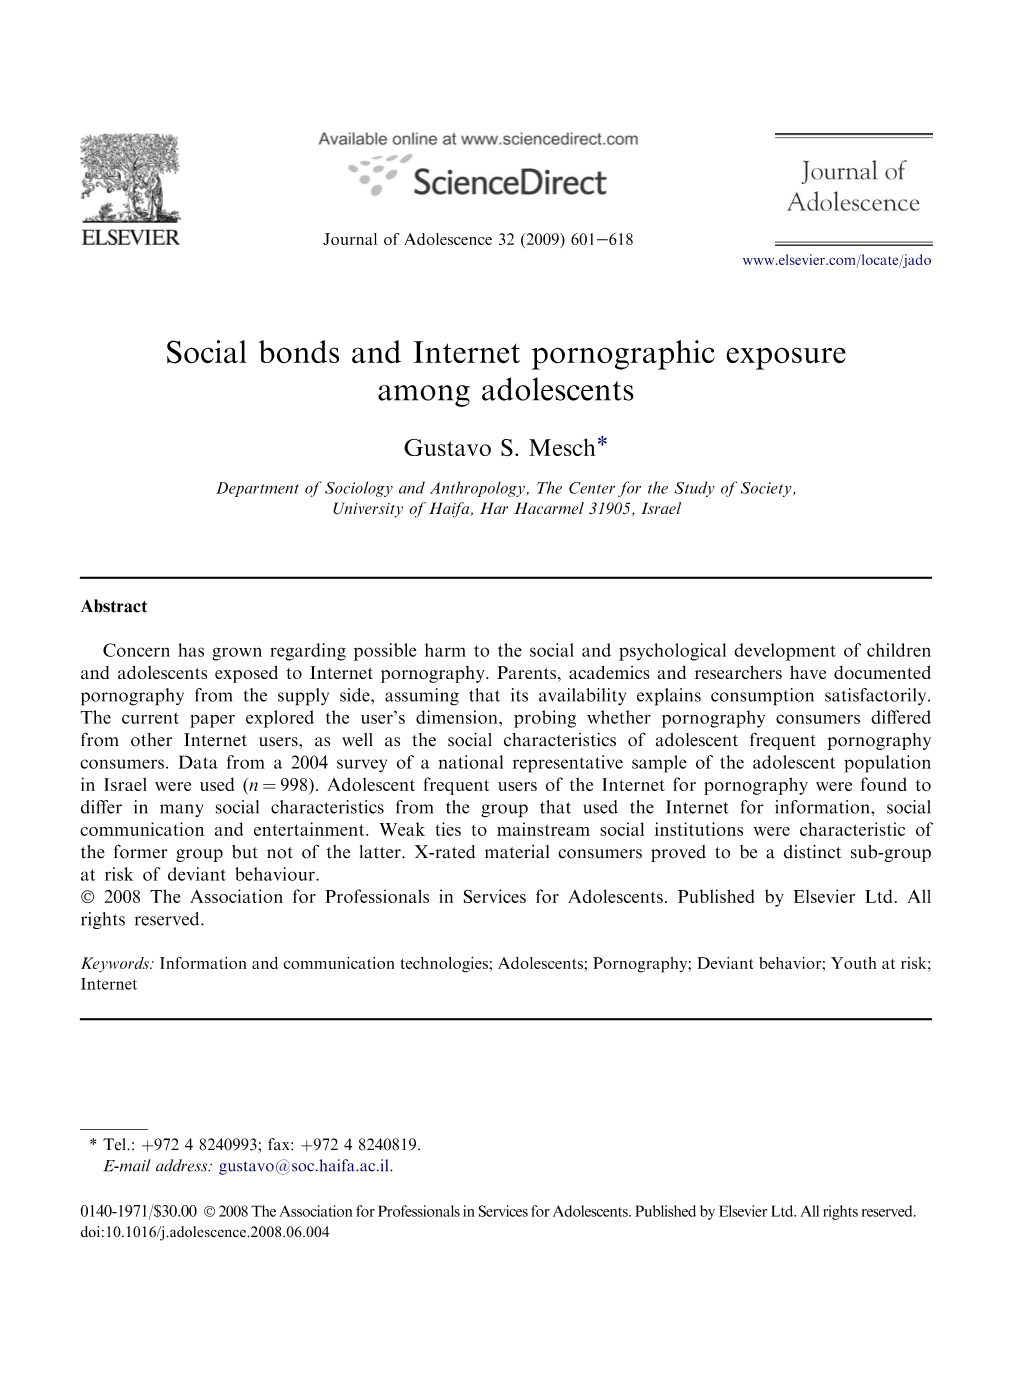 Social Bonds and Internet Pornographic Exposure Among Adolescents